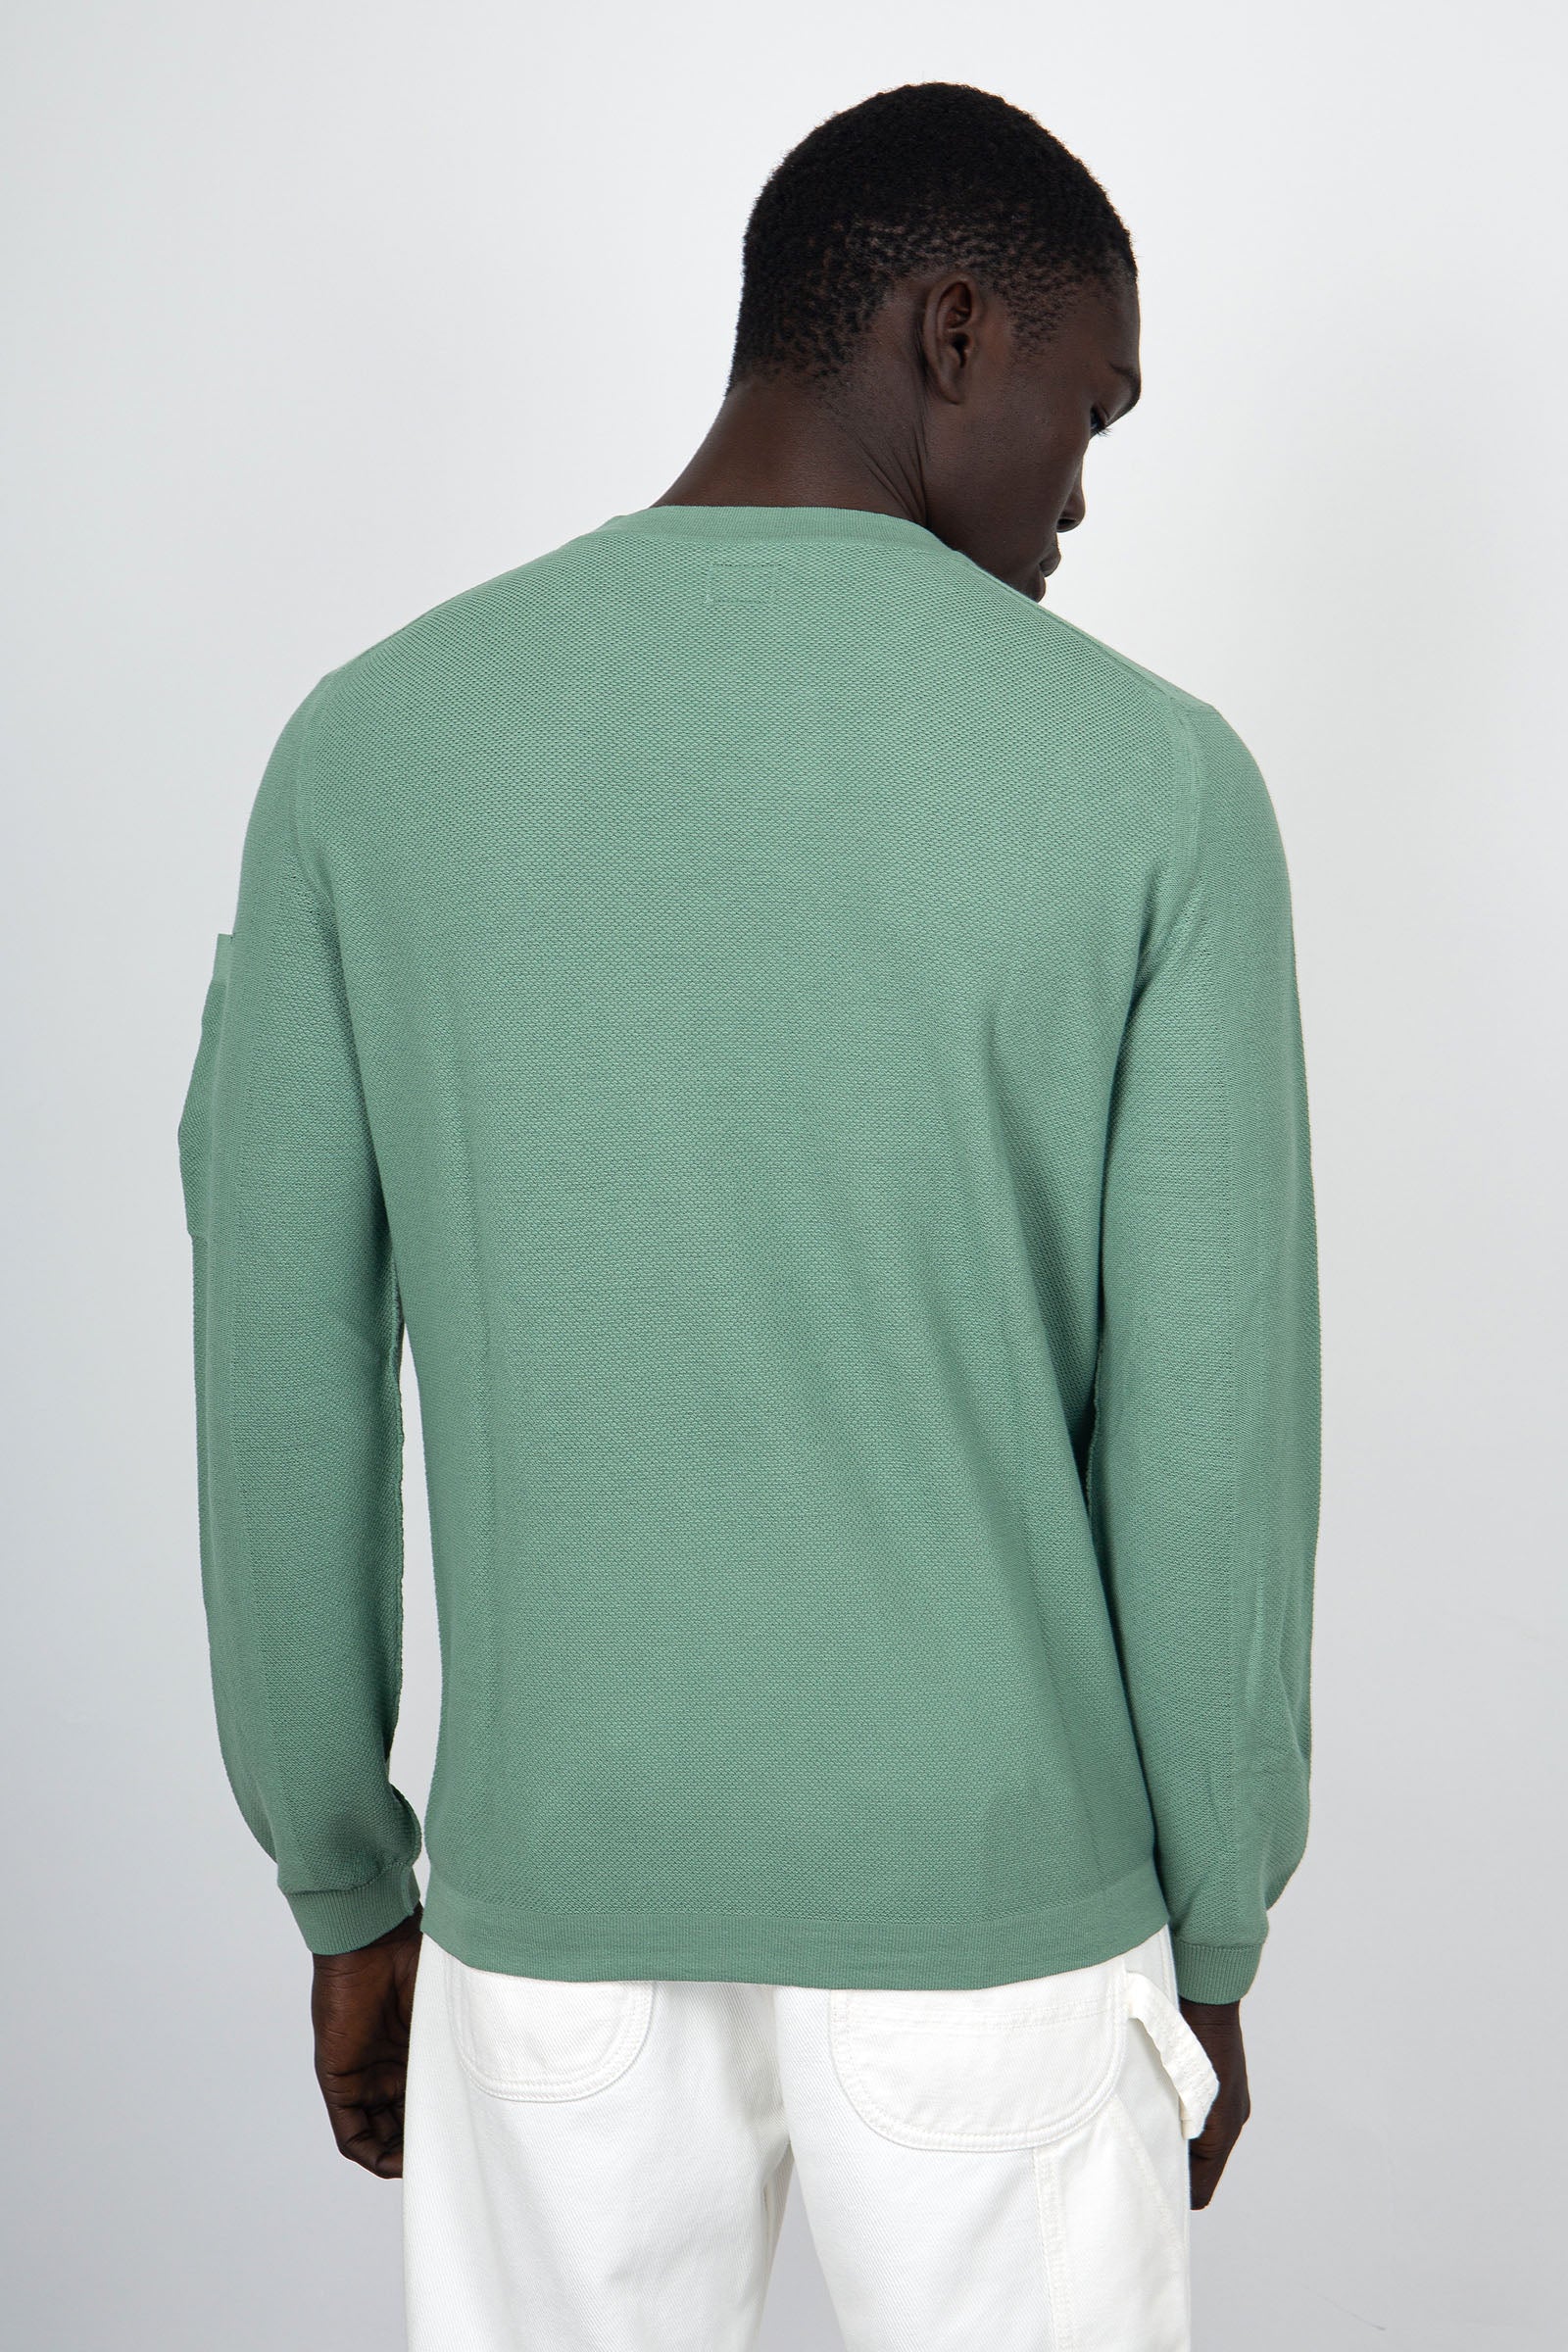 C.P. Company Cotton Crepe Green Sweater - 4